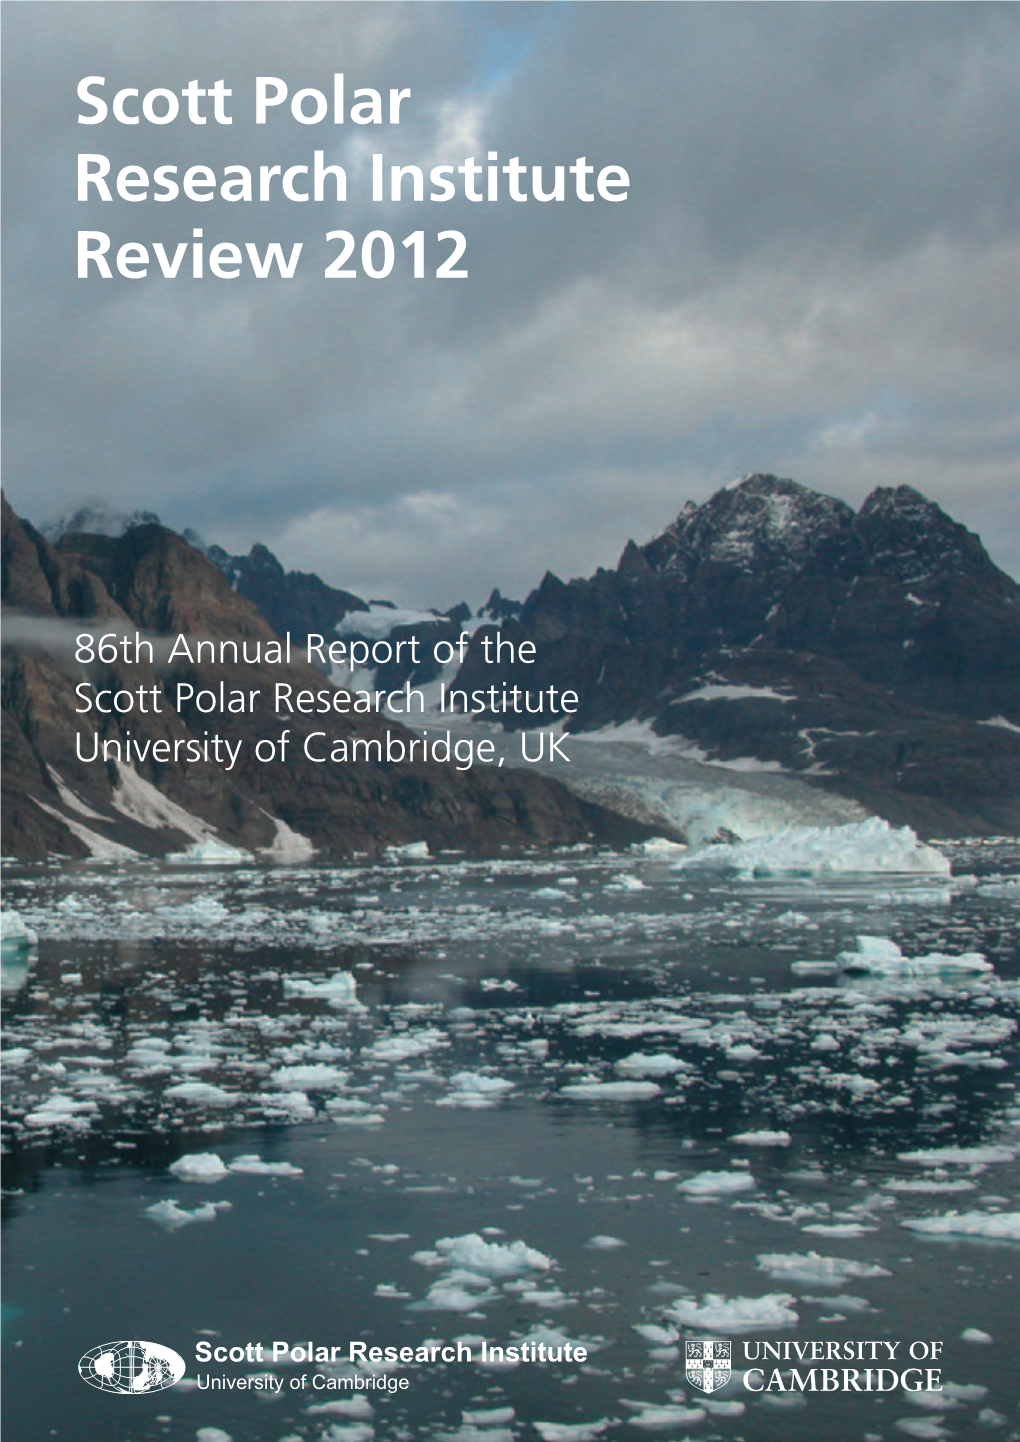 Scott Polar Research Institute Review 2012